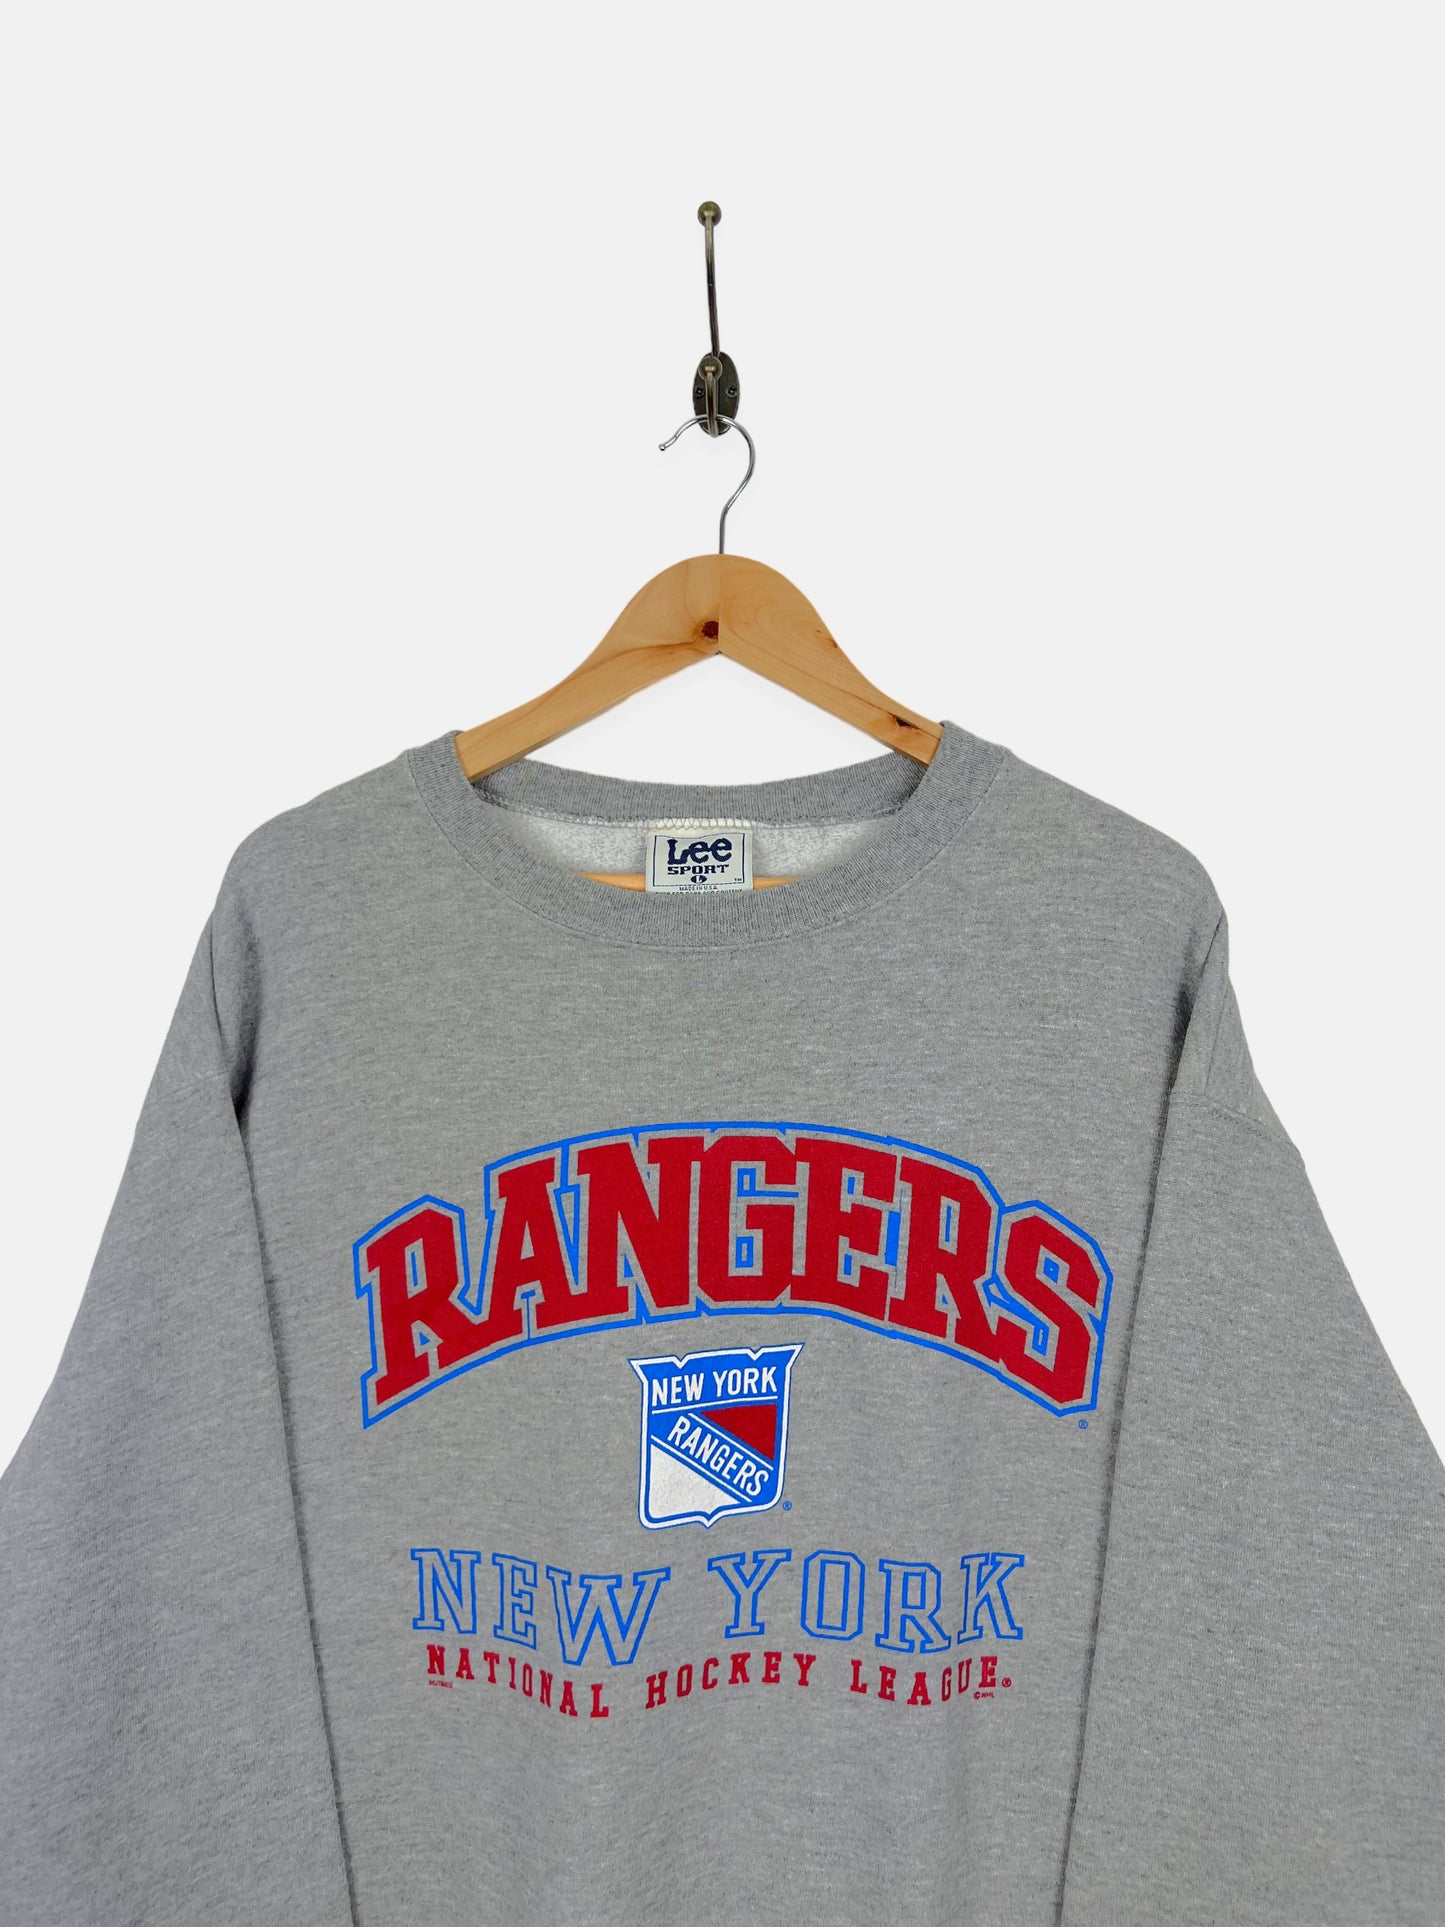 90's New York Rangers NHL USA Made Vintage Sweatshirt Size M-L